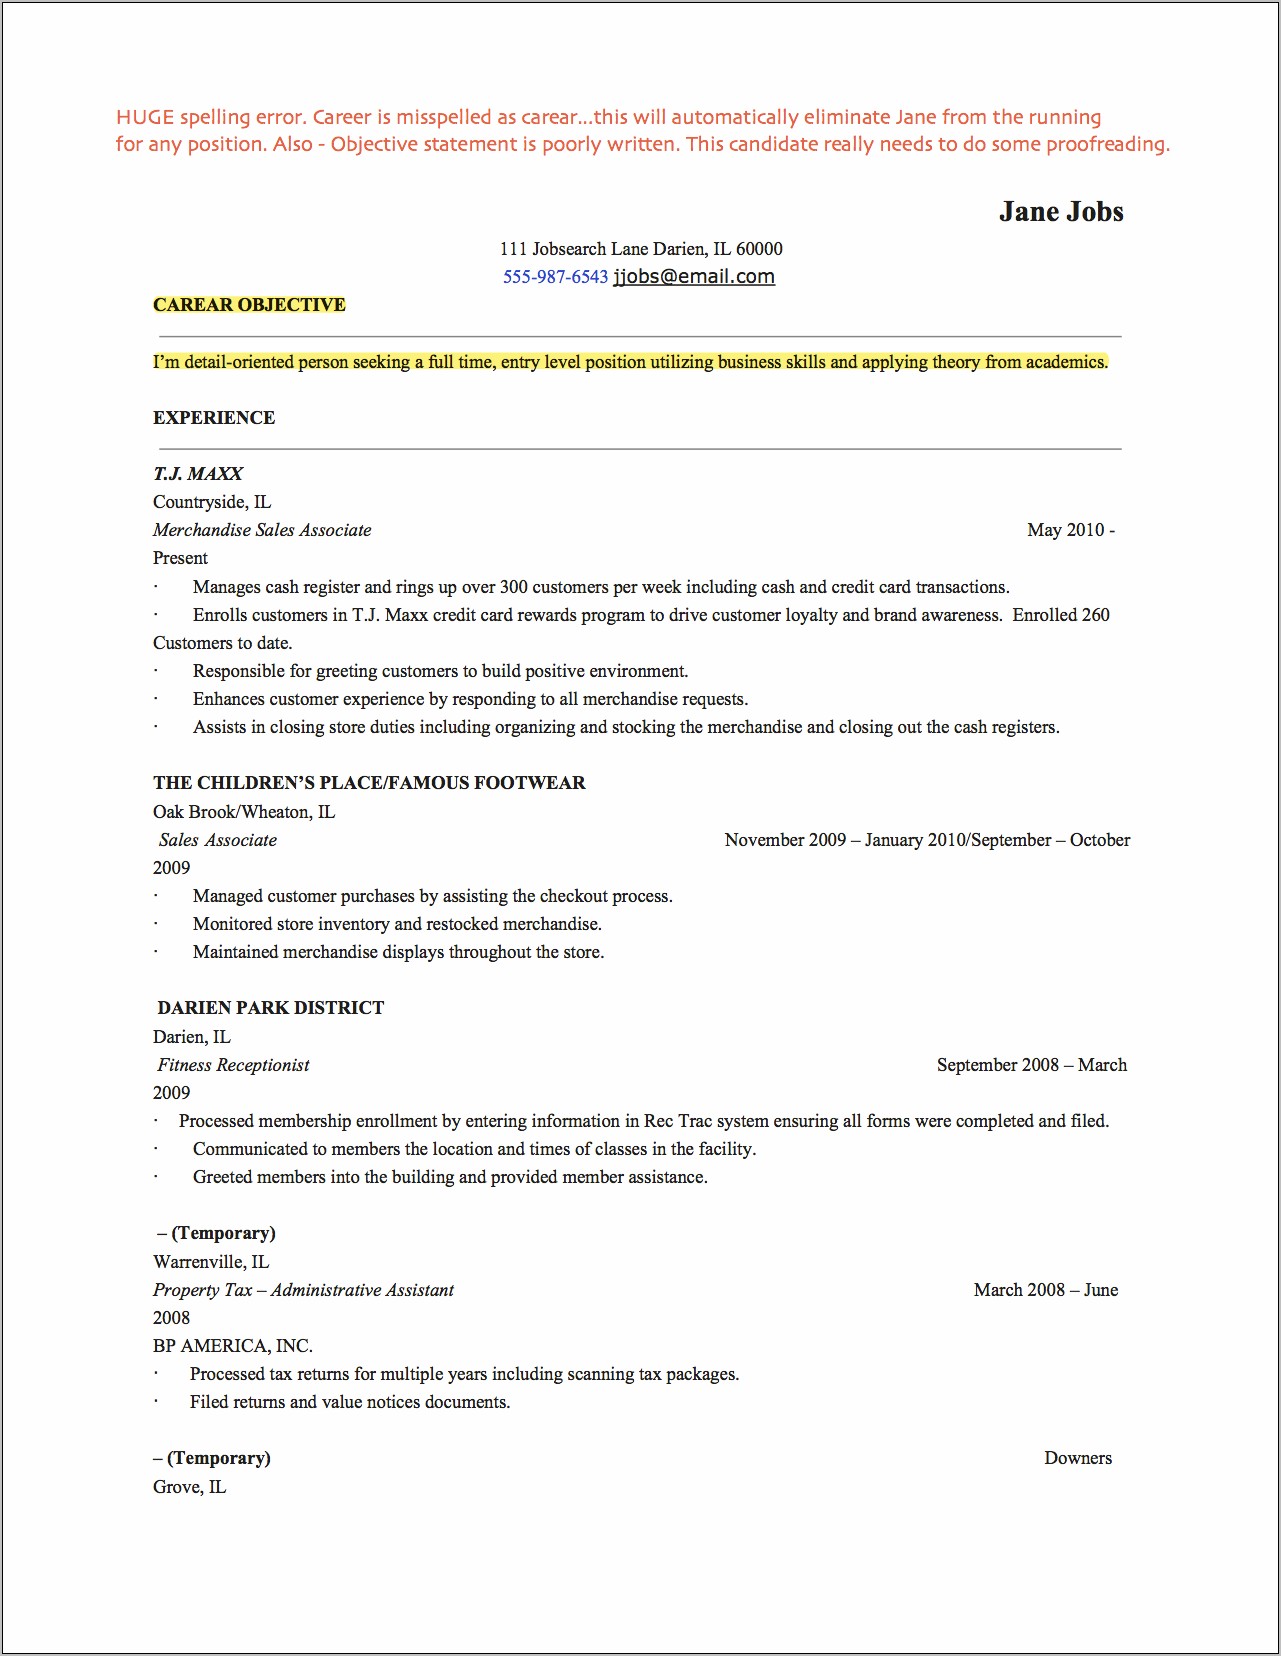 Objective For Psychology Internship Resume